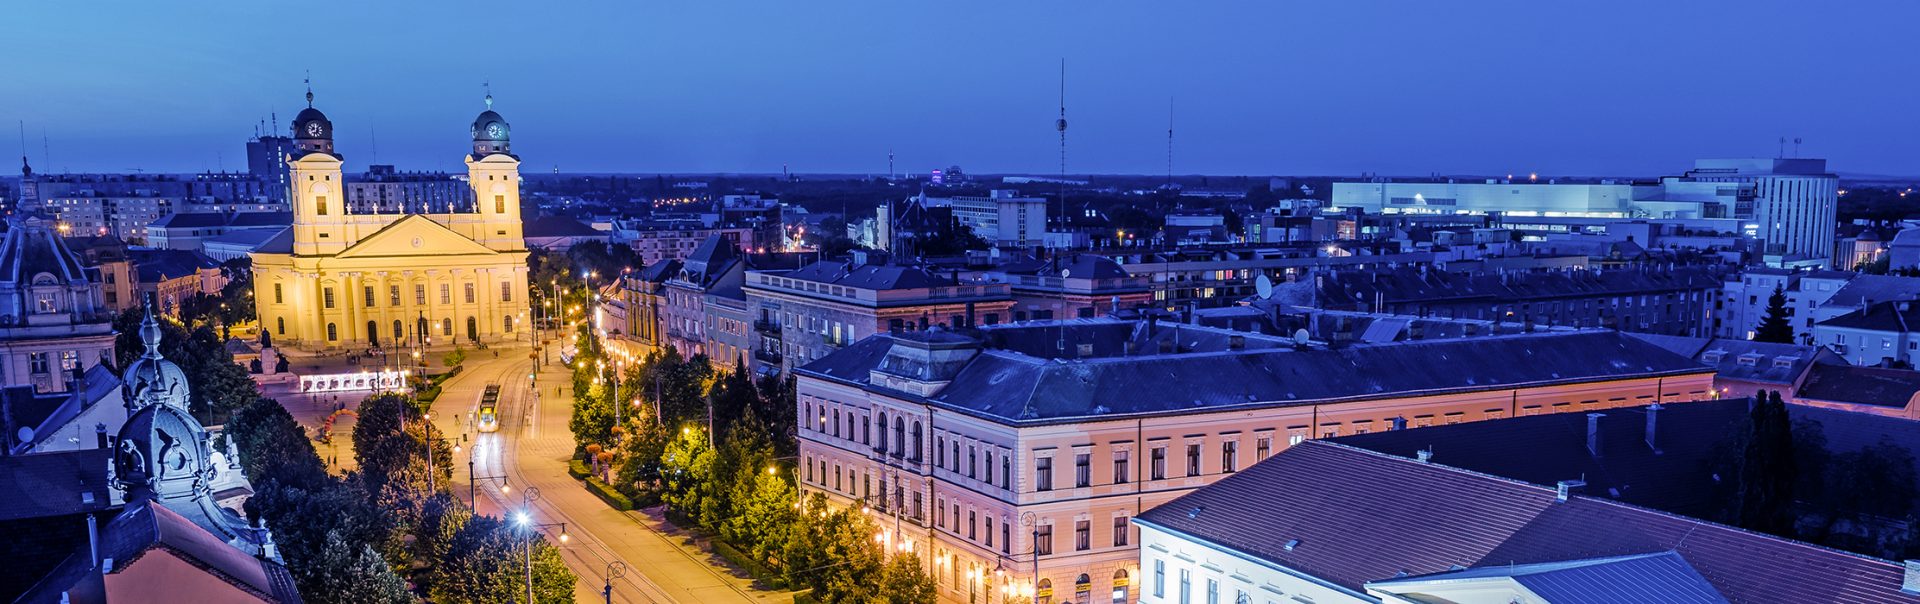 View over the city of Debrecen.